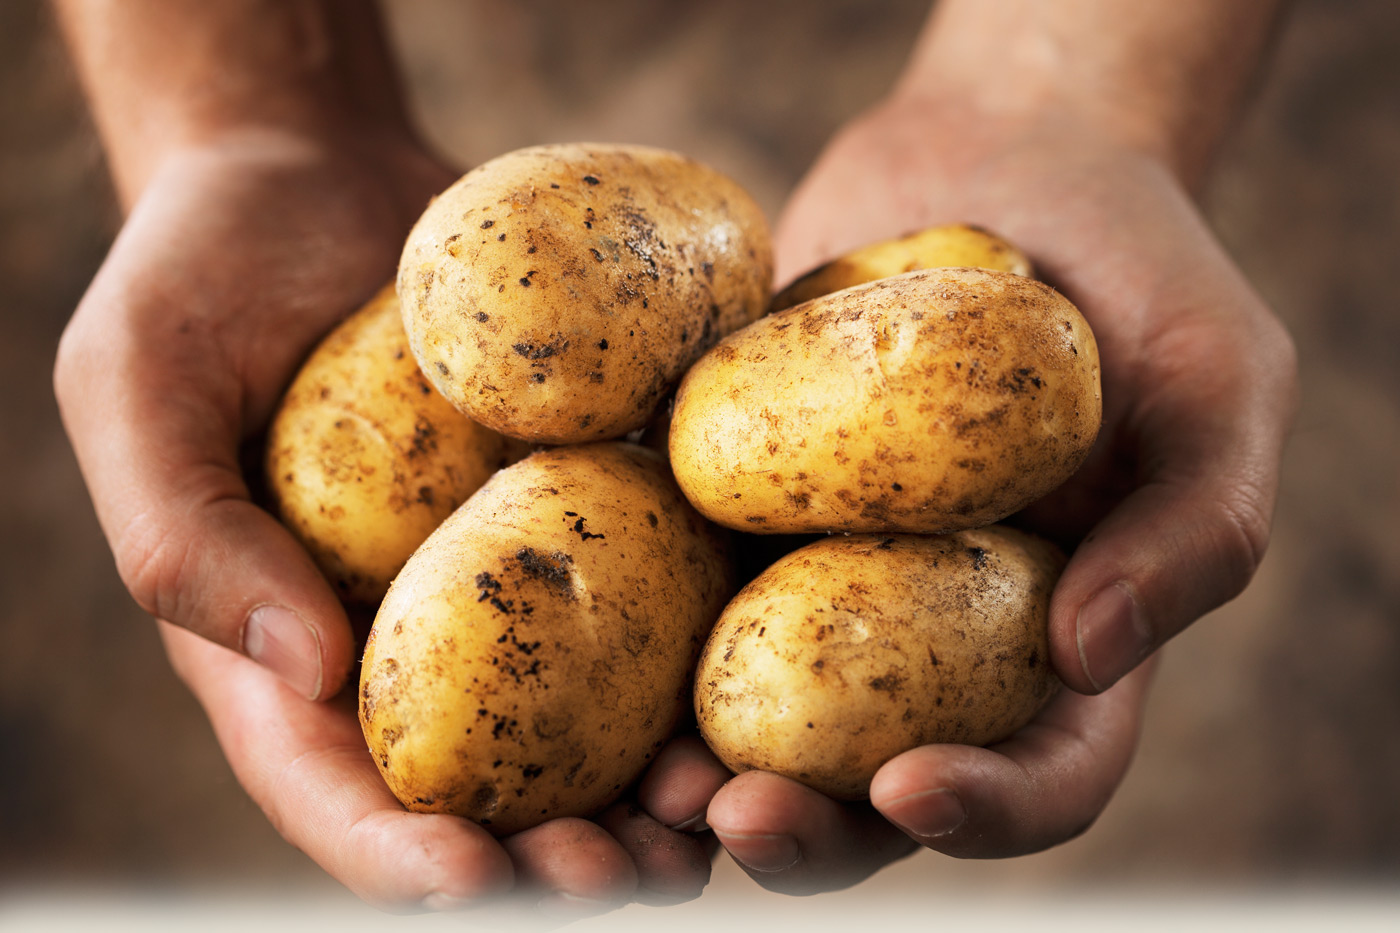 Potato farming in Zimbabwe exposed – Part 3